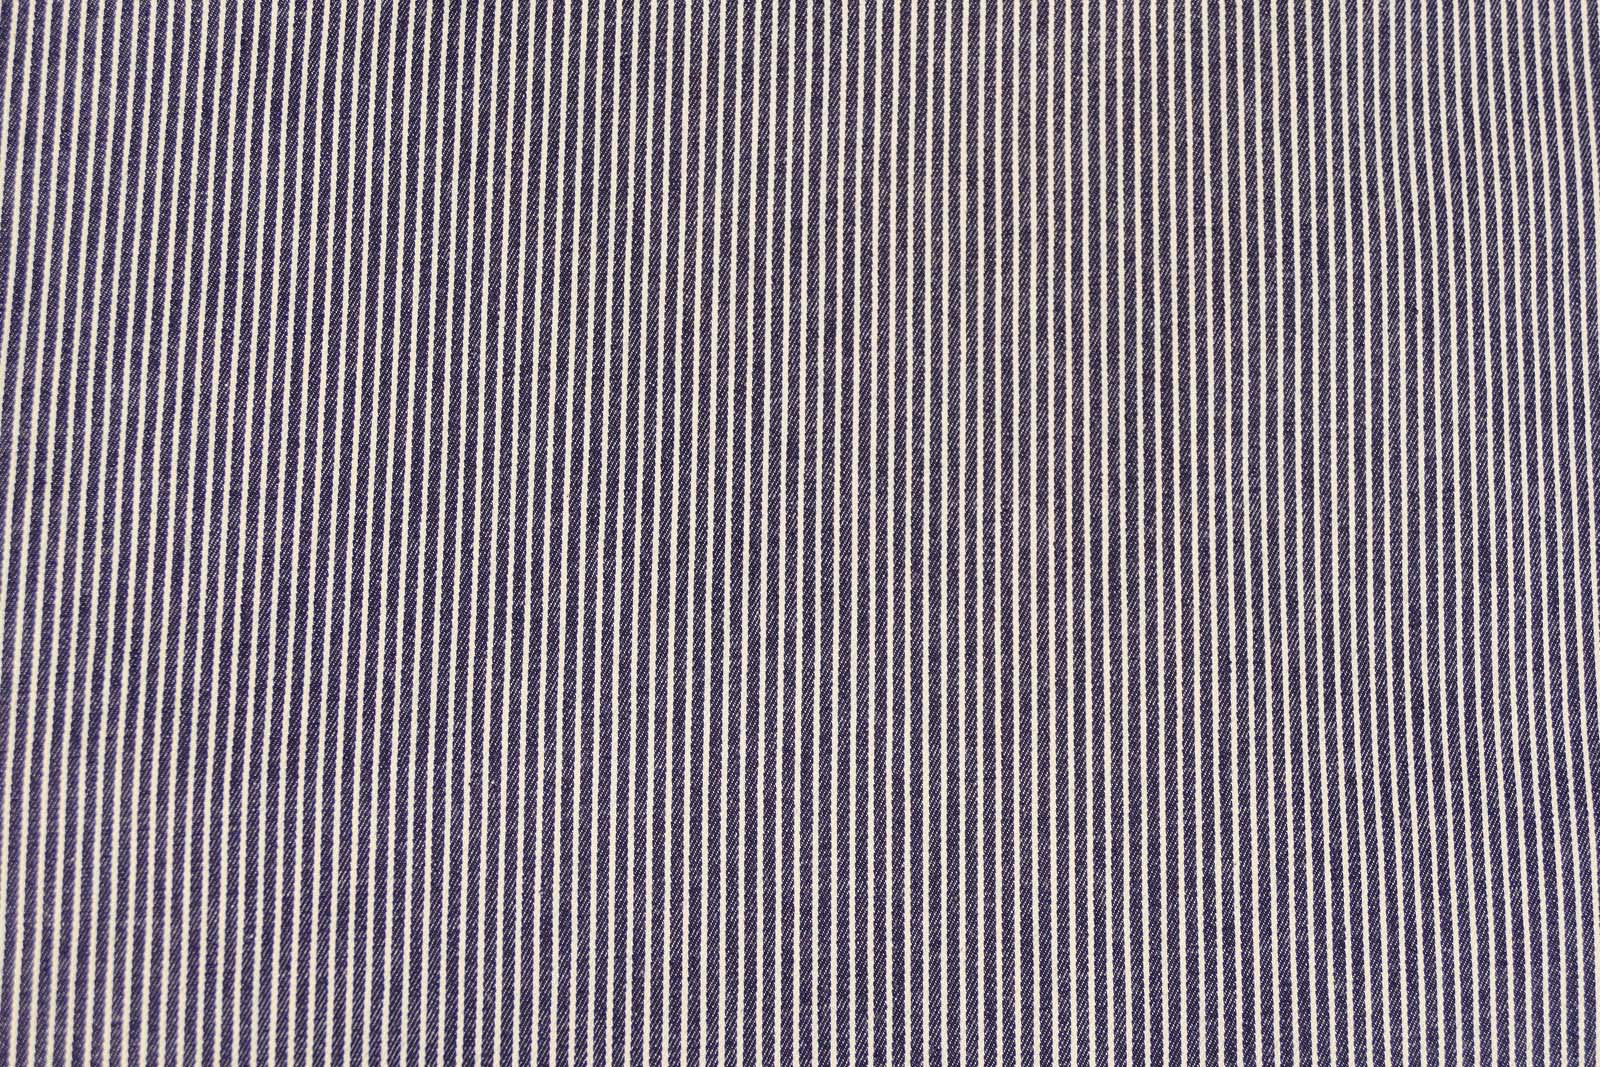 Jeansstretch dunkelblau weiß 518